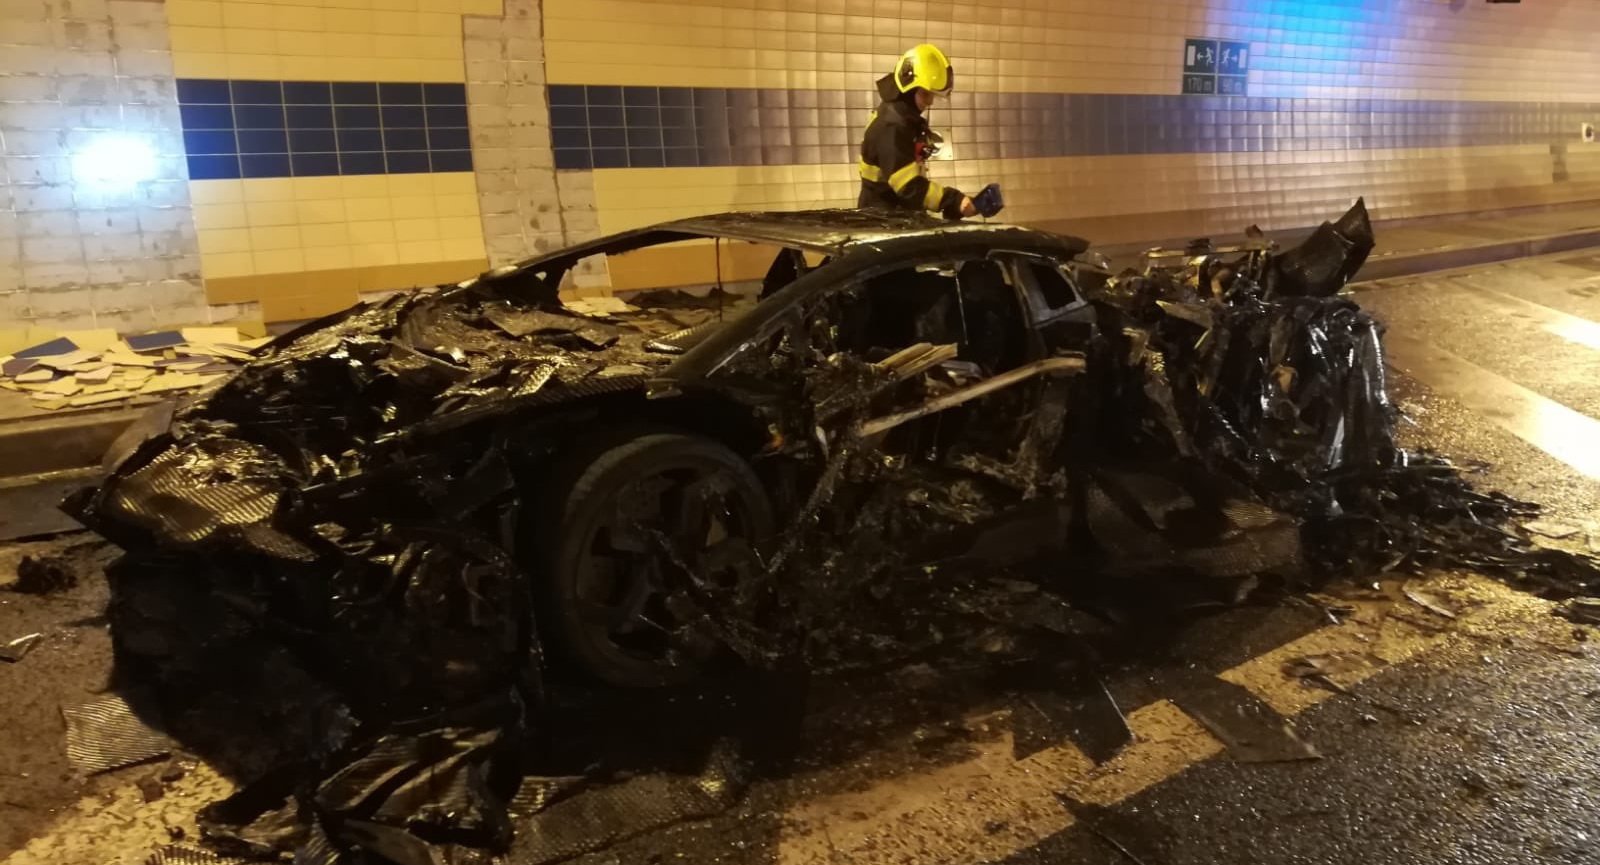 Pics - An ultra-rare customized Lamborghini Aventador with 1250 hp got burnt down to a crisp in a Prague tunnel - Luxurylaunches